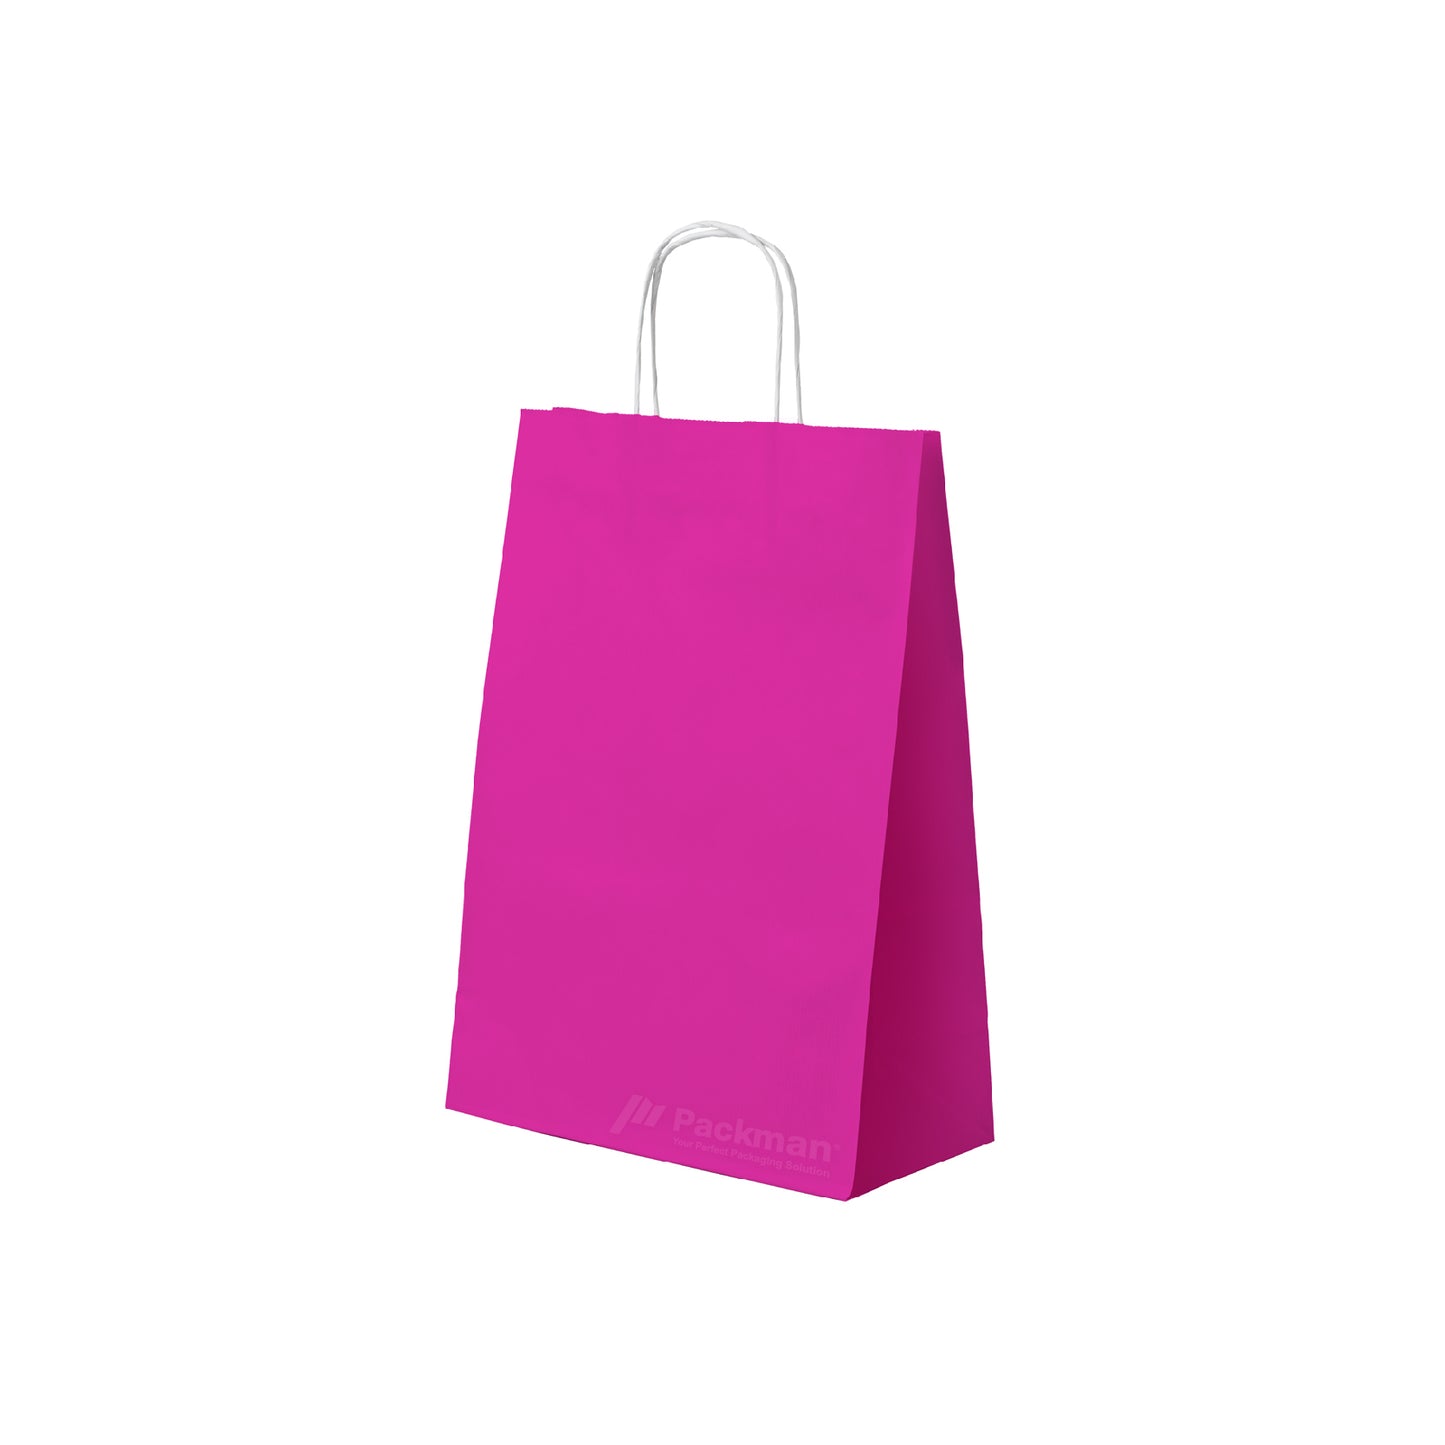 25 x 12 x 32cm Fuchsia Pink Paper Bag (100pcs)